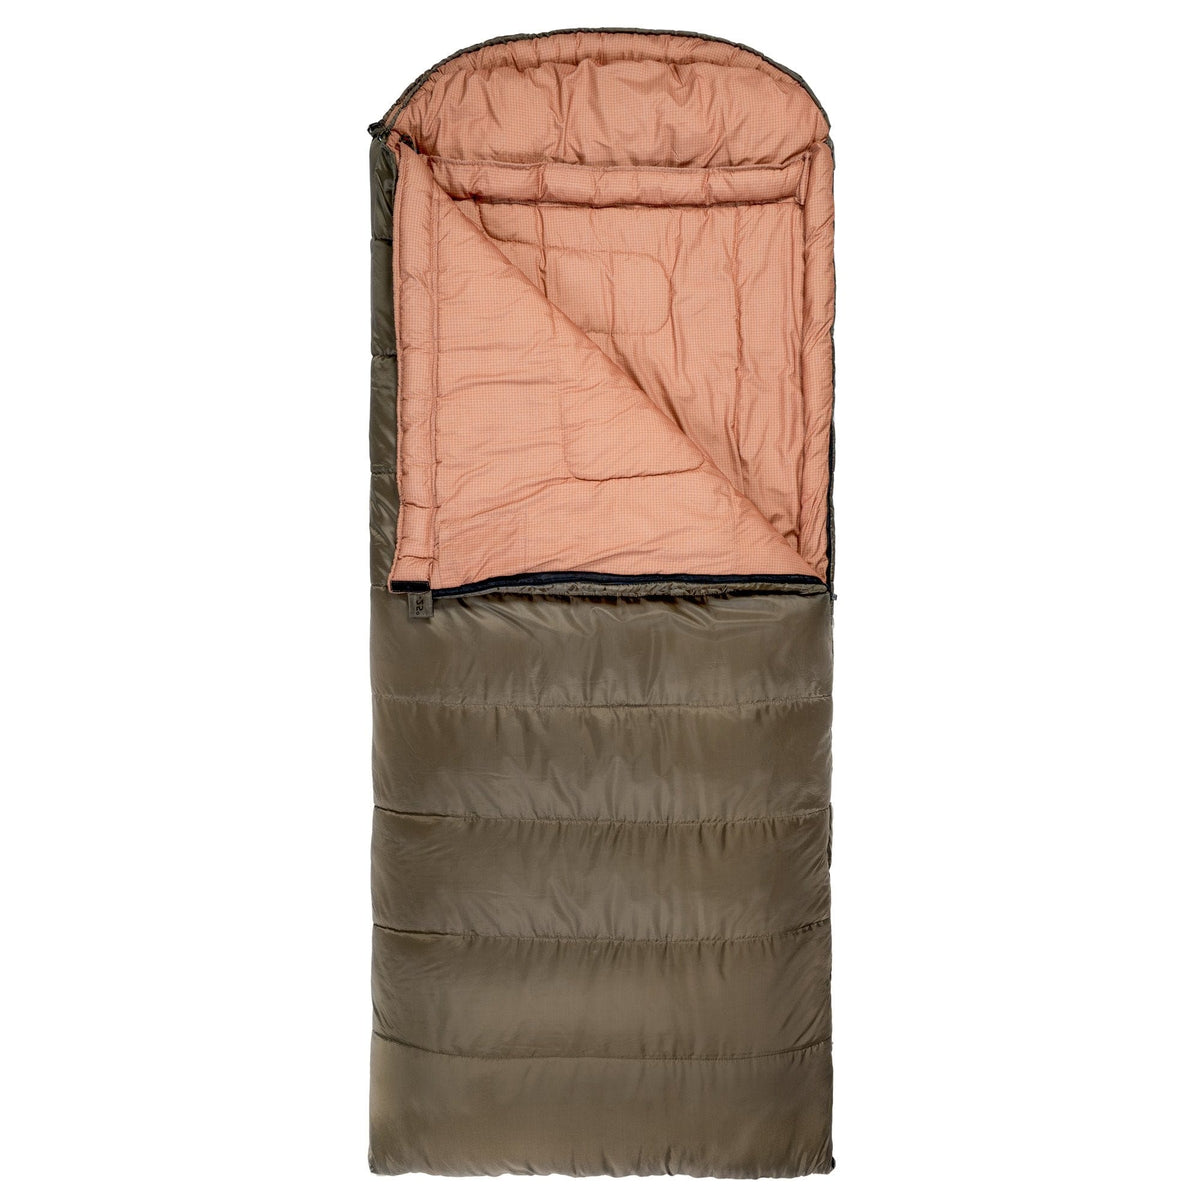 TETON Sports Celsius XL -25˚F Sleeping Bag Left Zipper / Green 113L